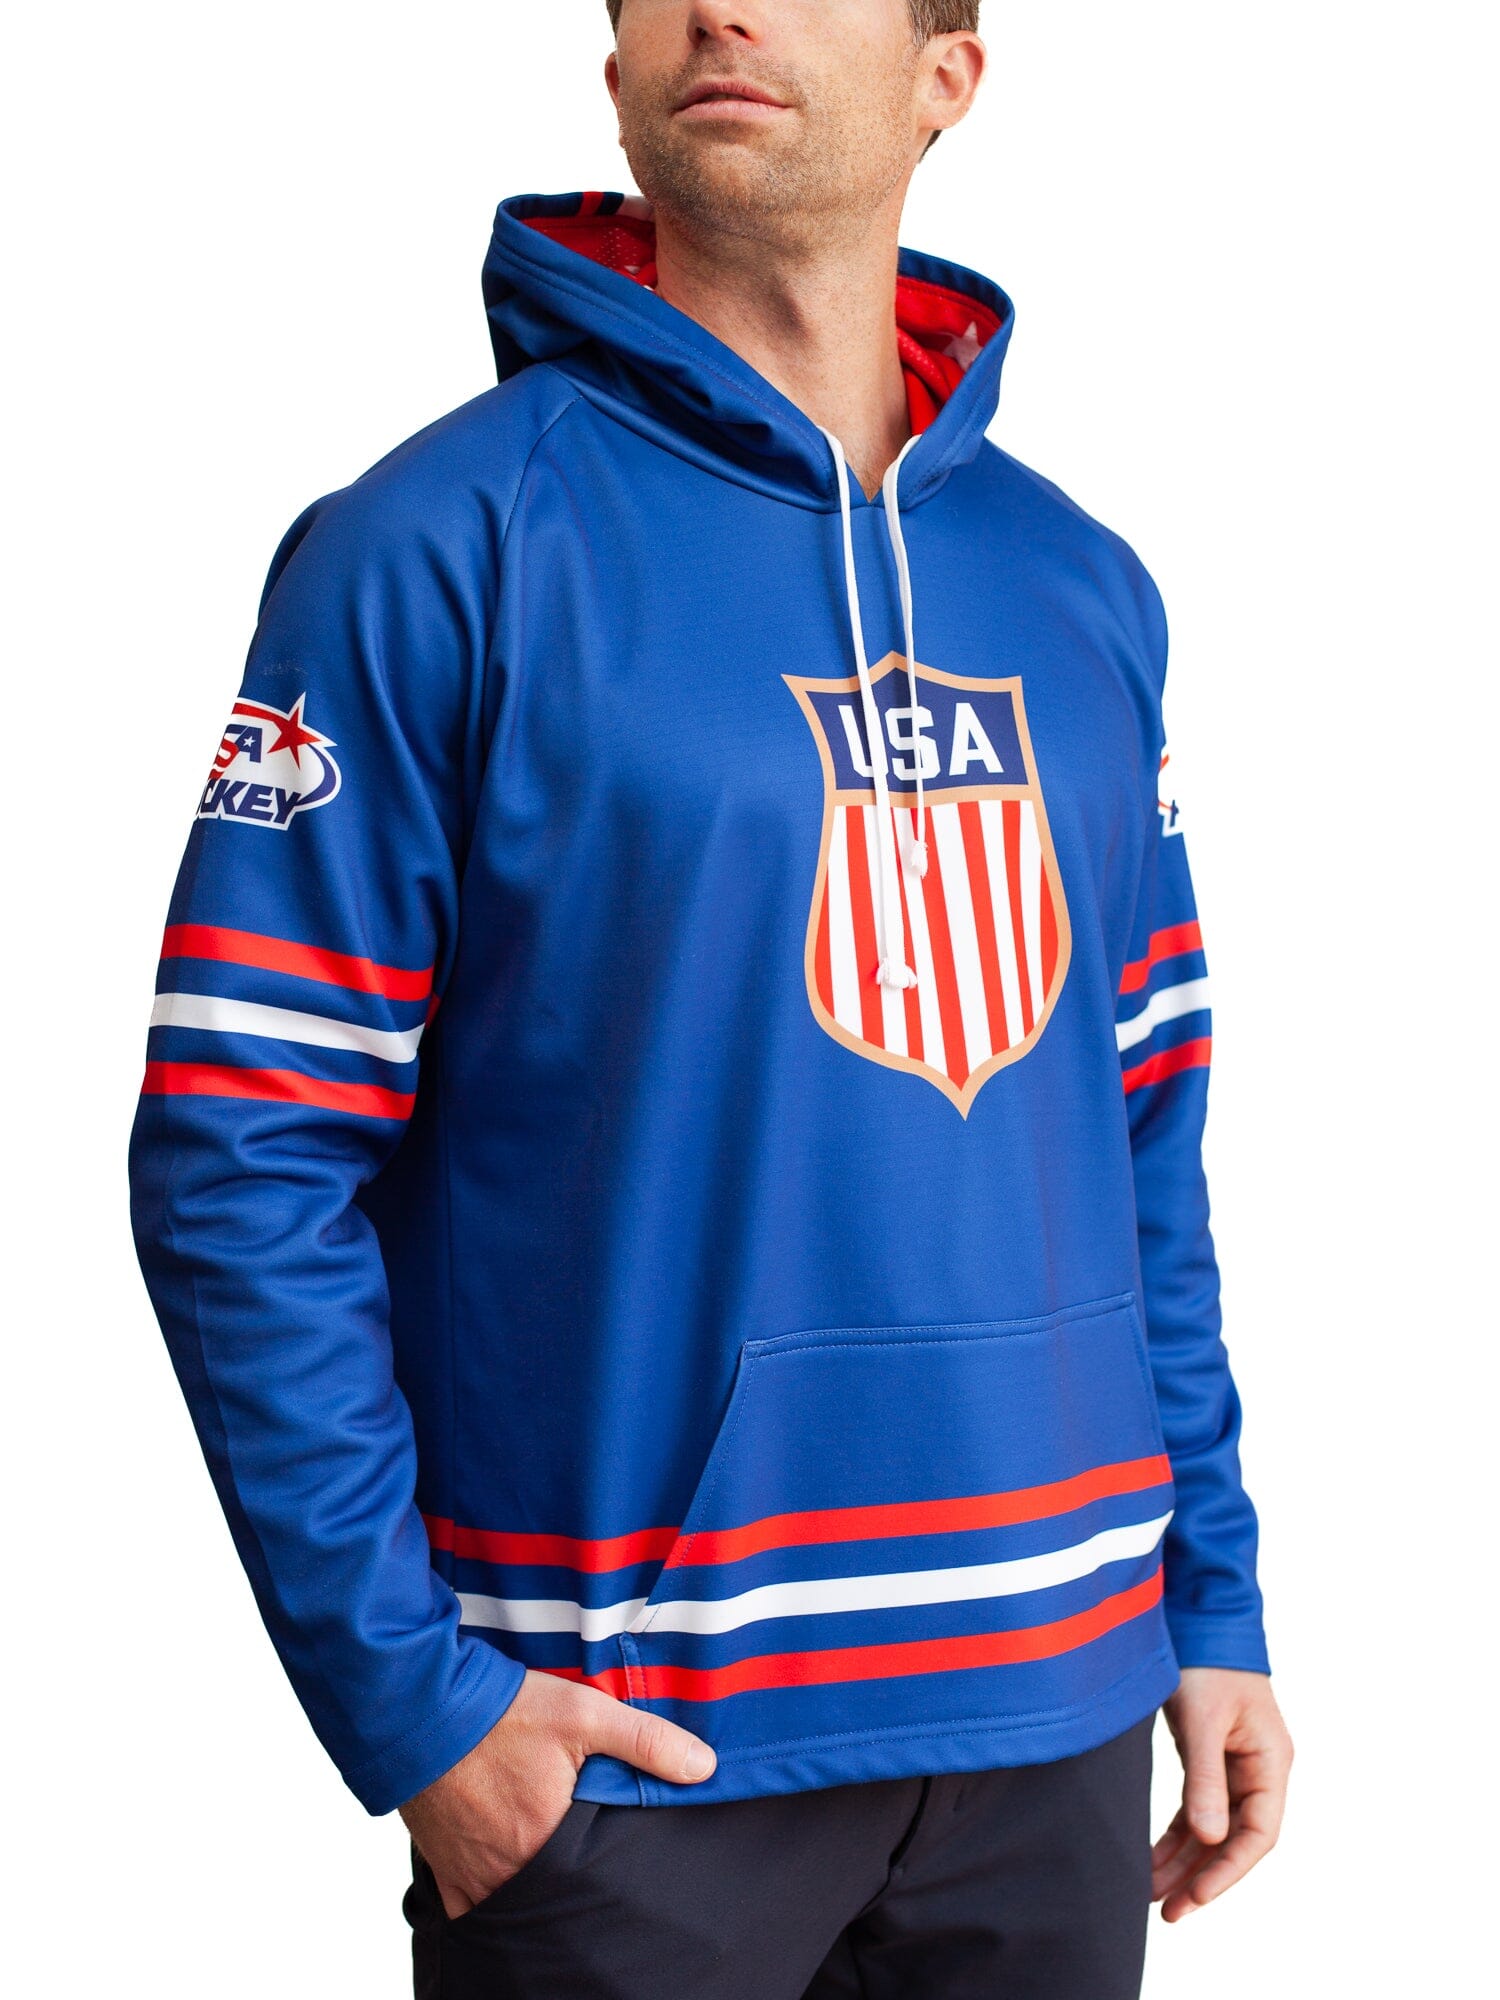 USA Hockey Gray Hoodie Sweatshirt with skate lace drawstrings